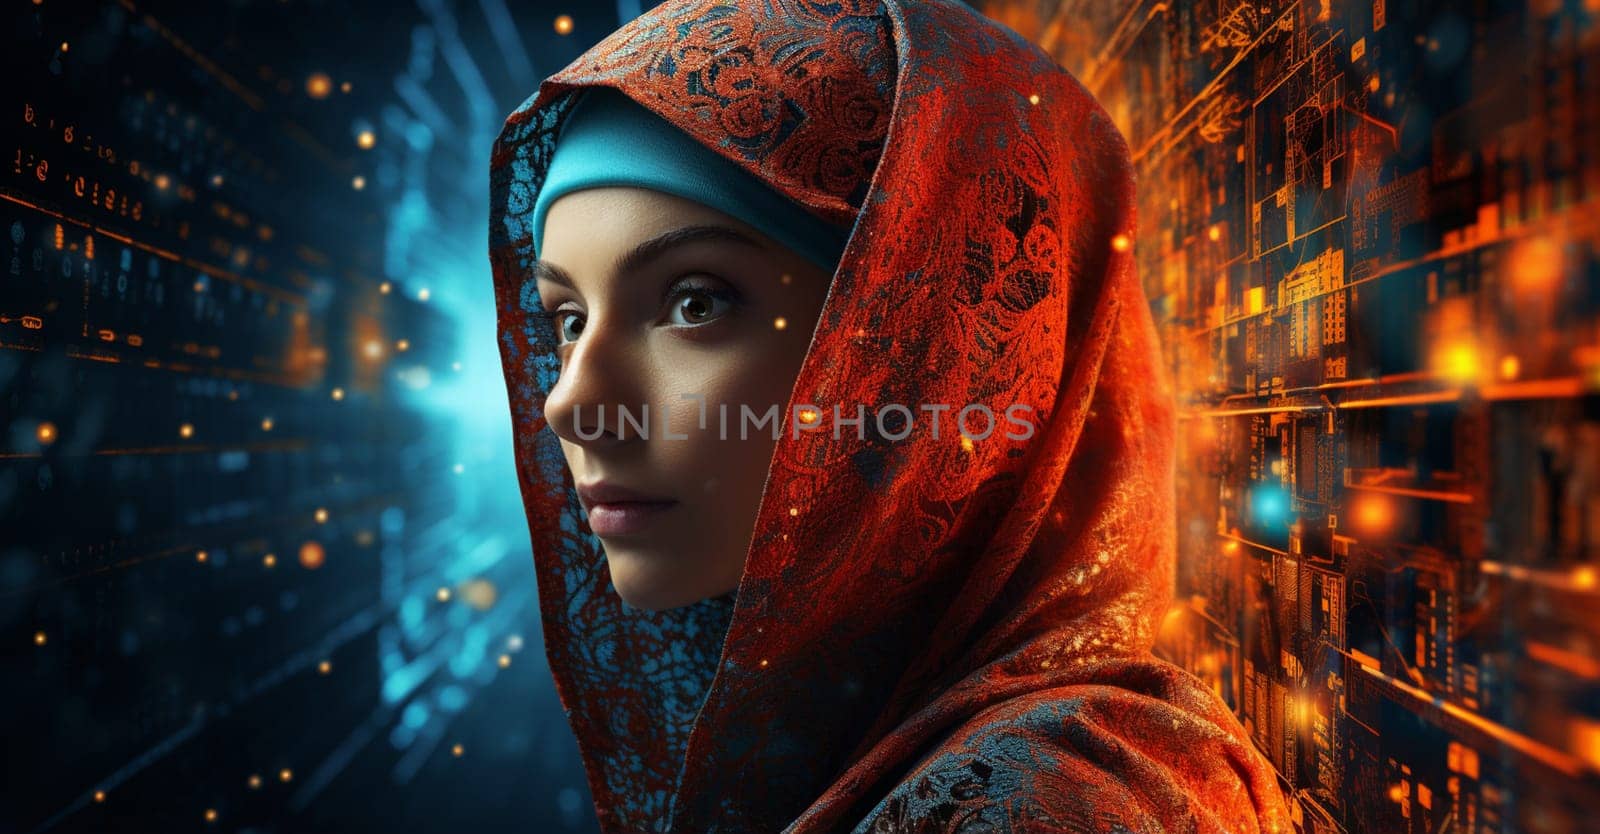 Young Arabic woman. Stylish portrait by Andelov13